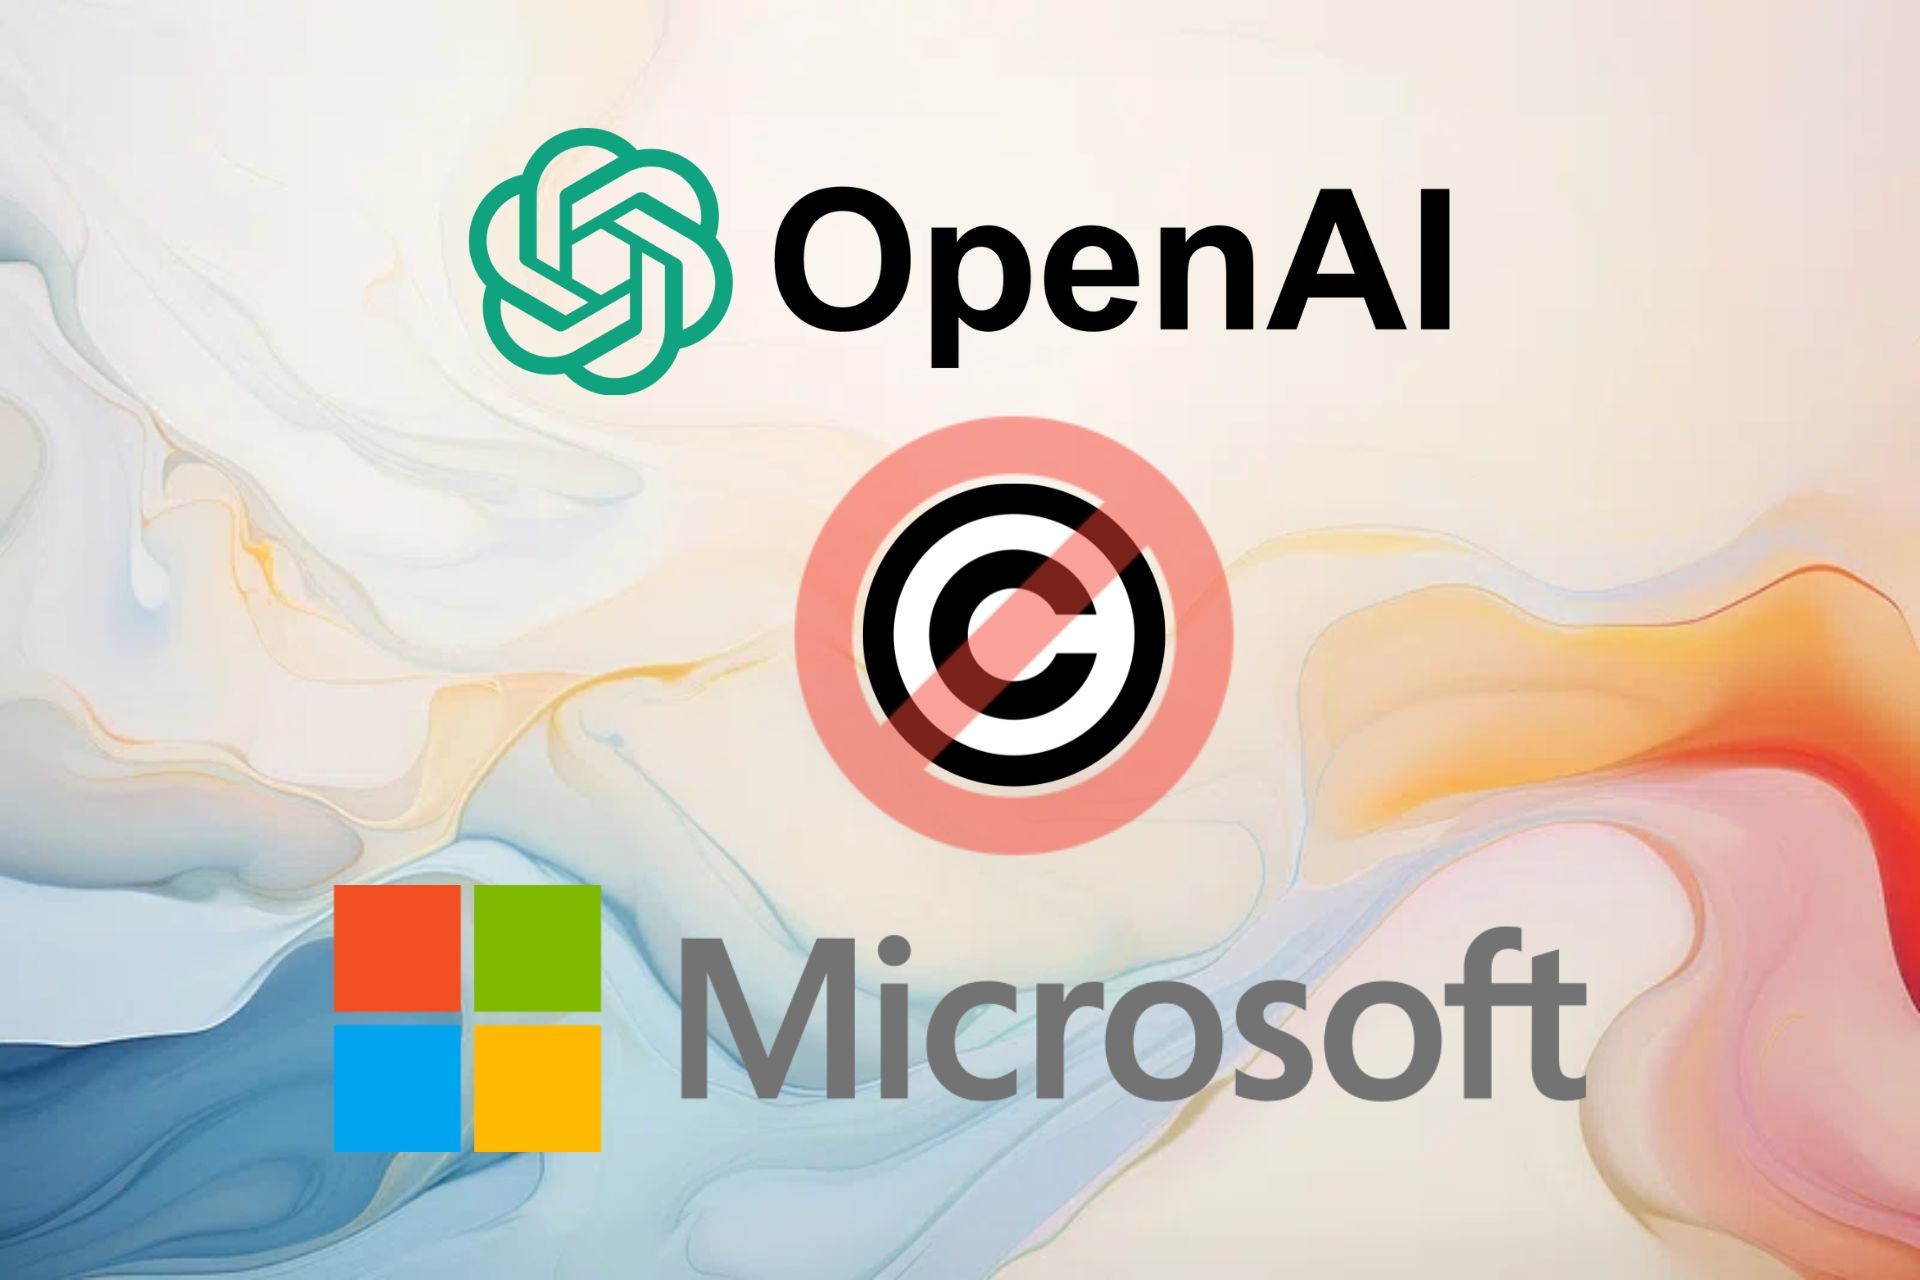 OpenAI and Microsoft causing copyright infringement